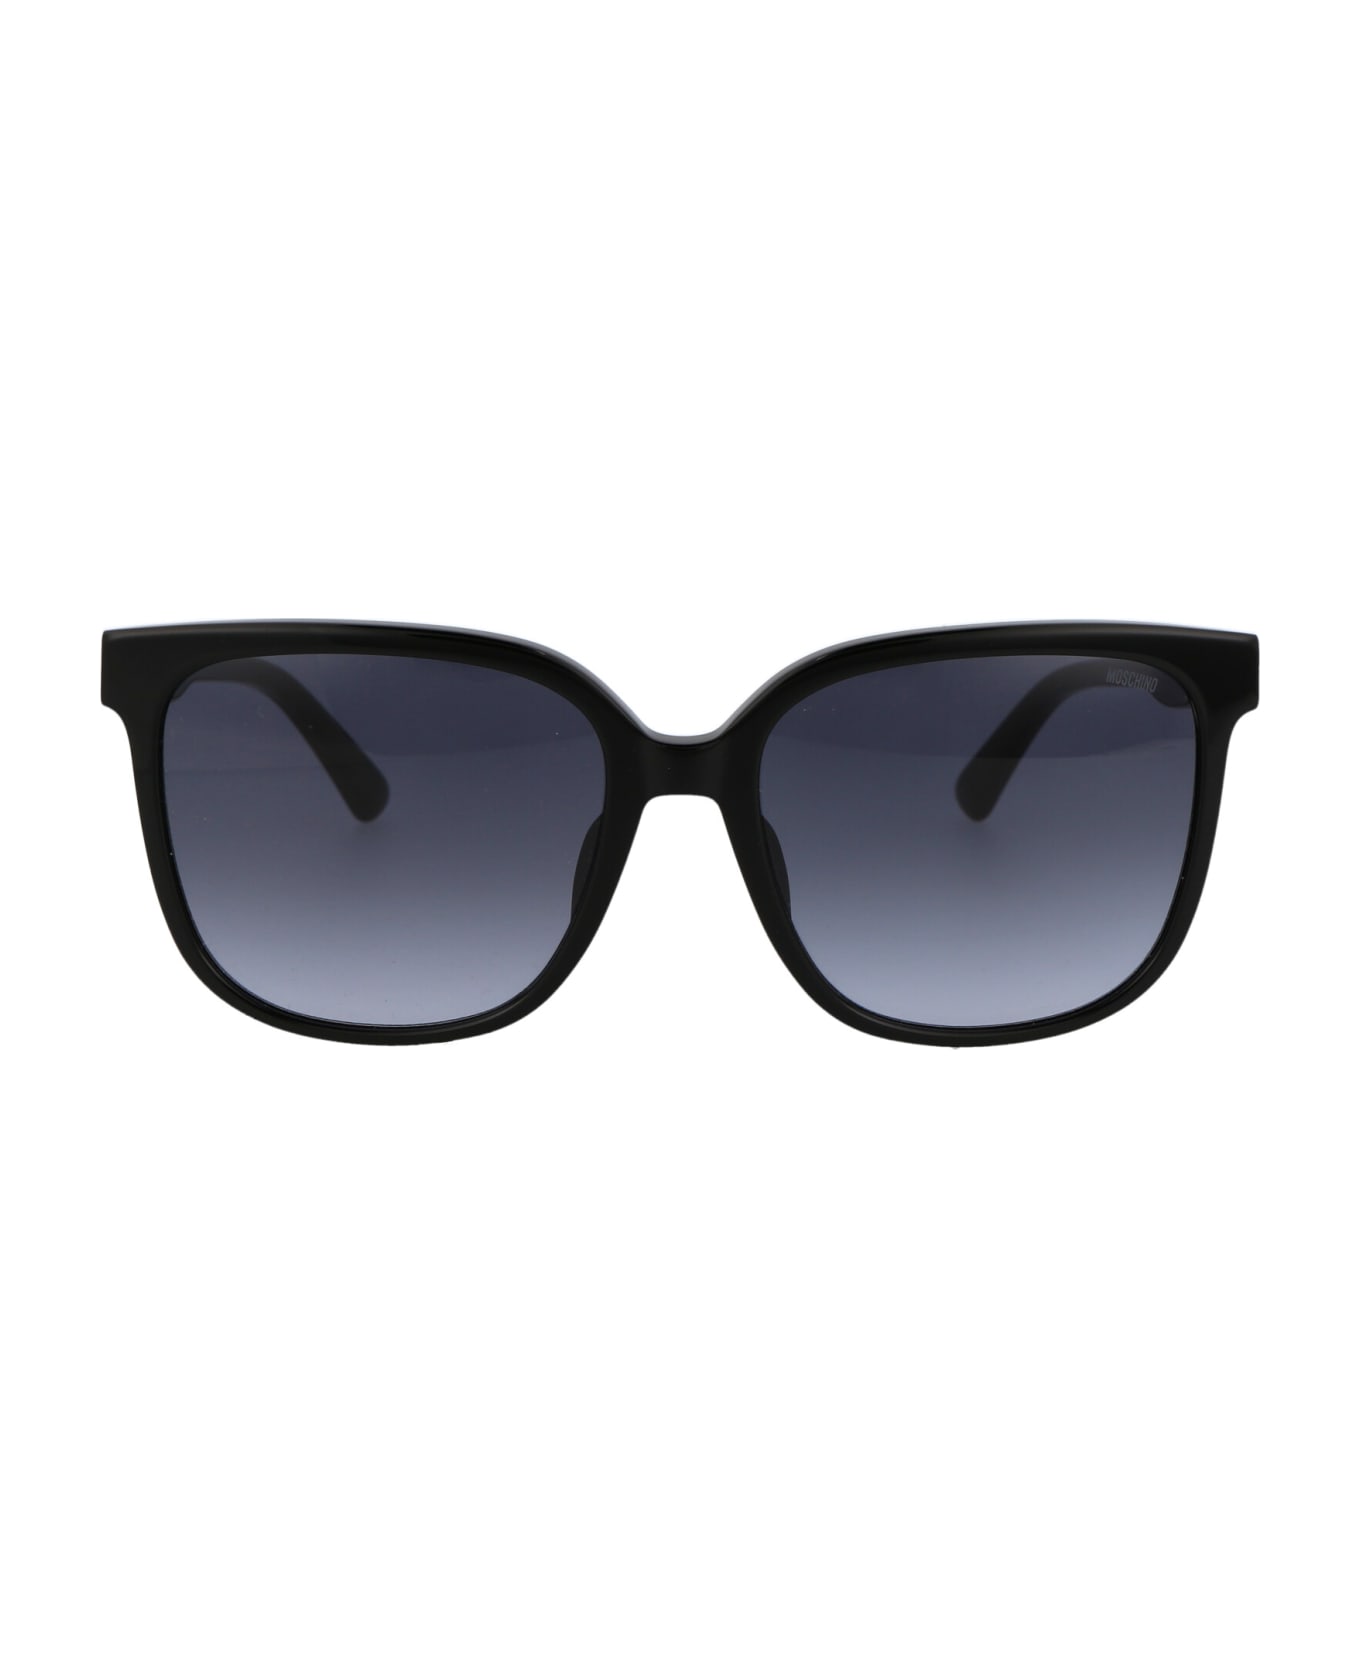 Moschino Eyewear Mos134/f/s Sunglasses - 7RM9O BLACK